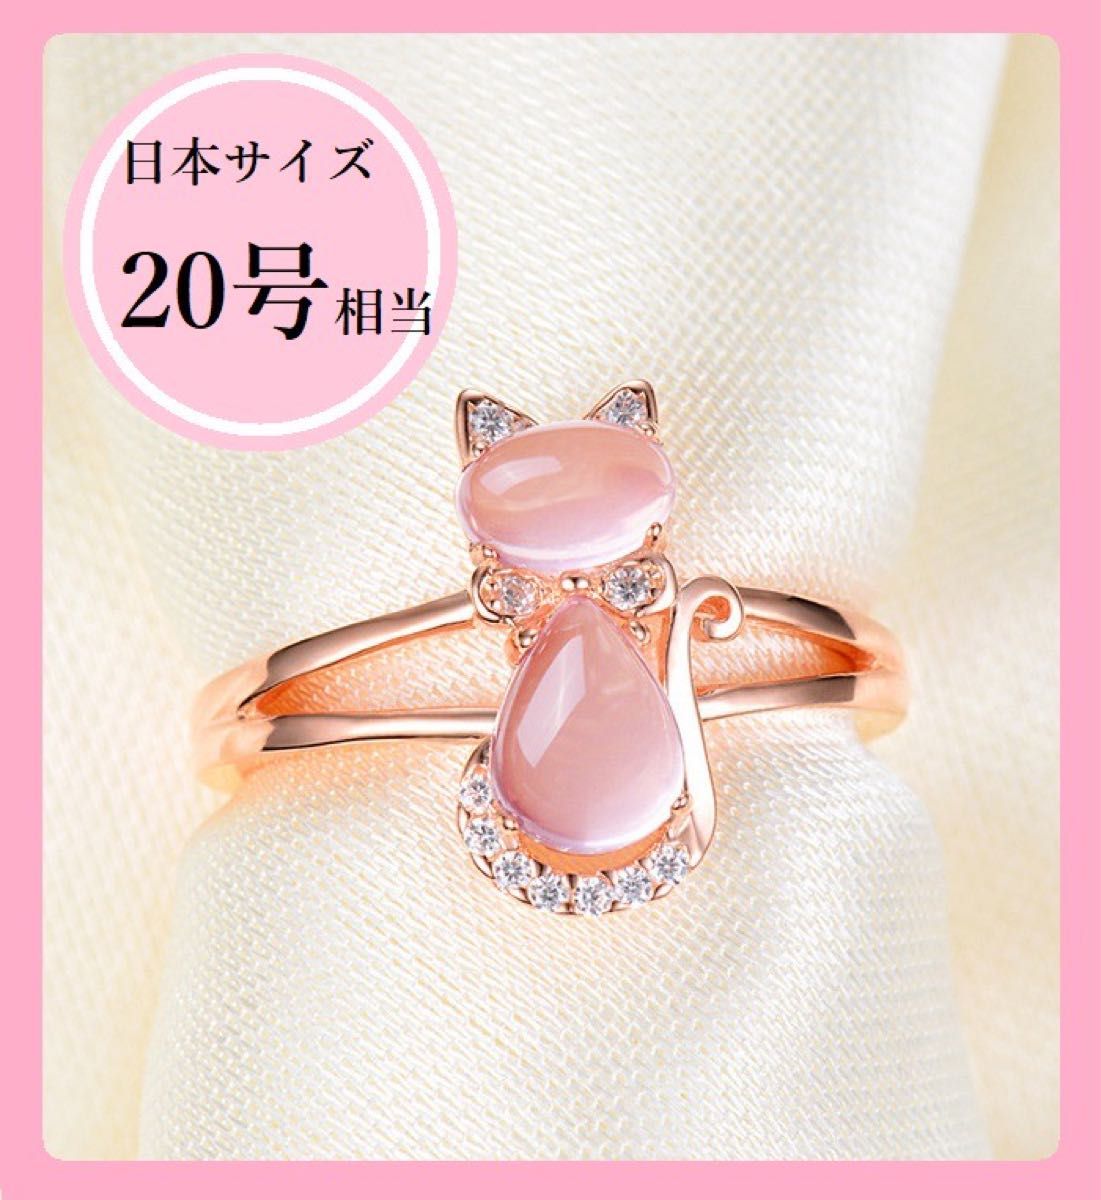 US10号/日本サイズ20号 猫 ネコ モチーフ 指輪 リング ピンク